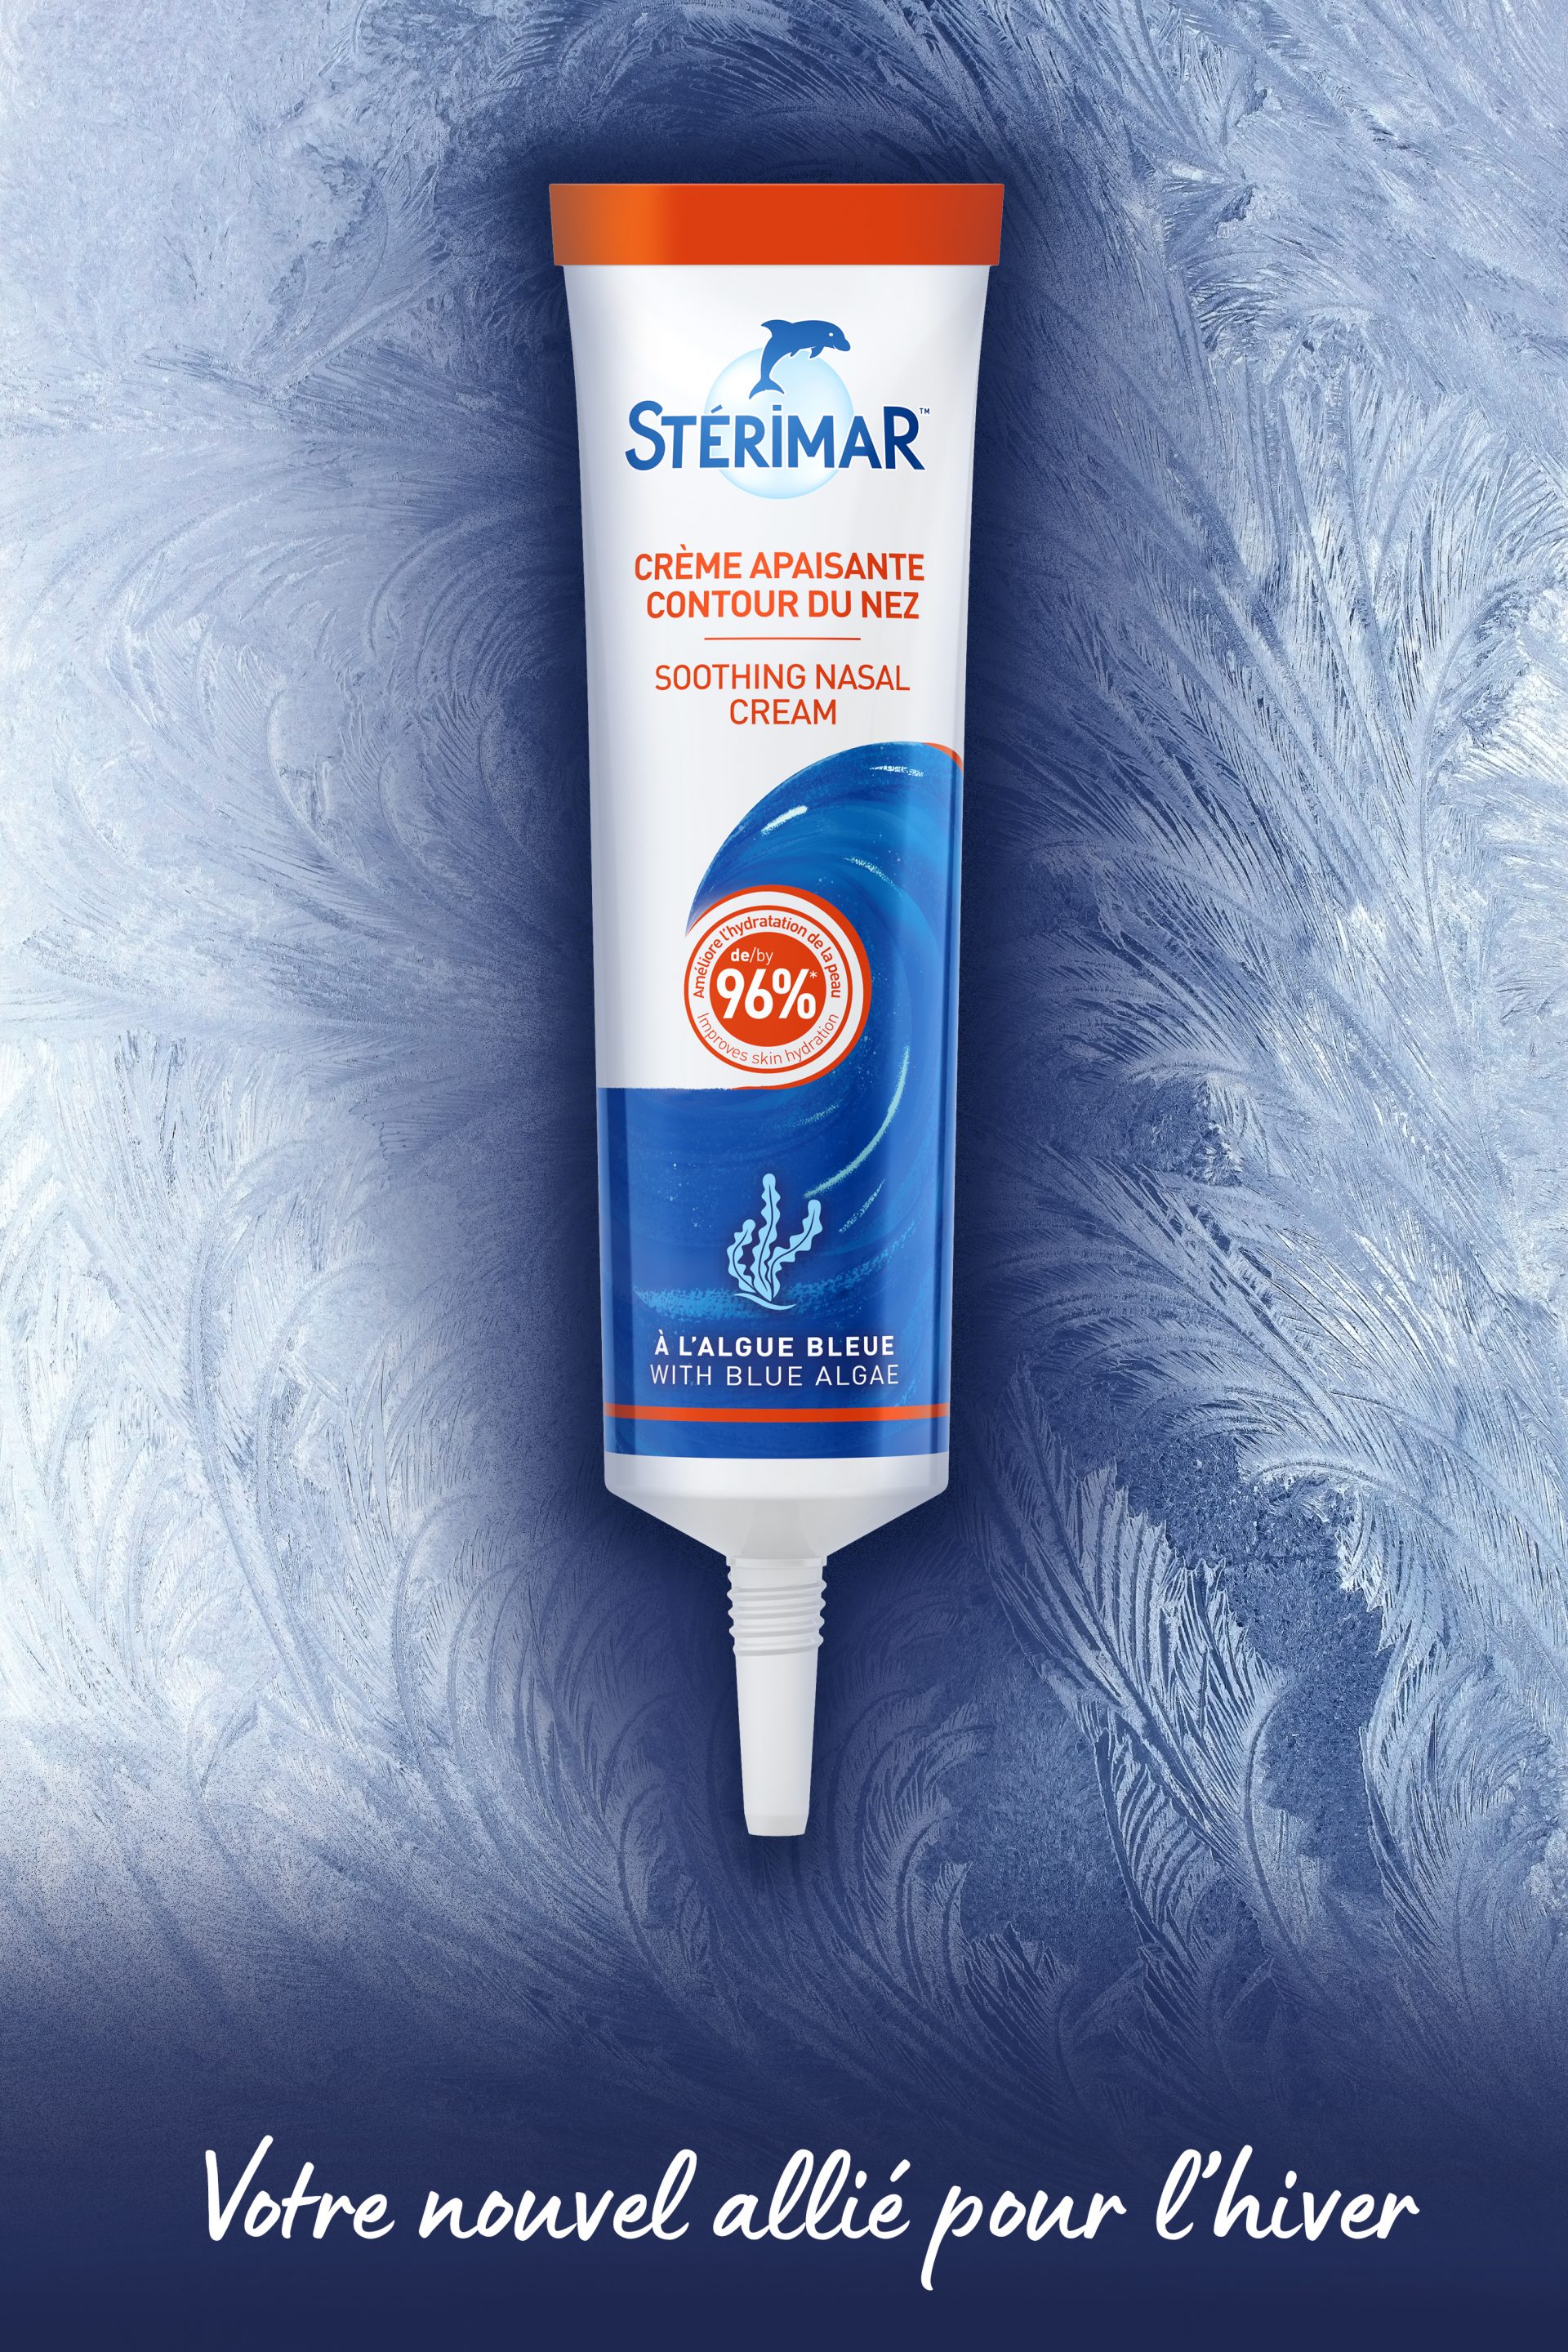 Stérimar™ New Packaging